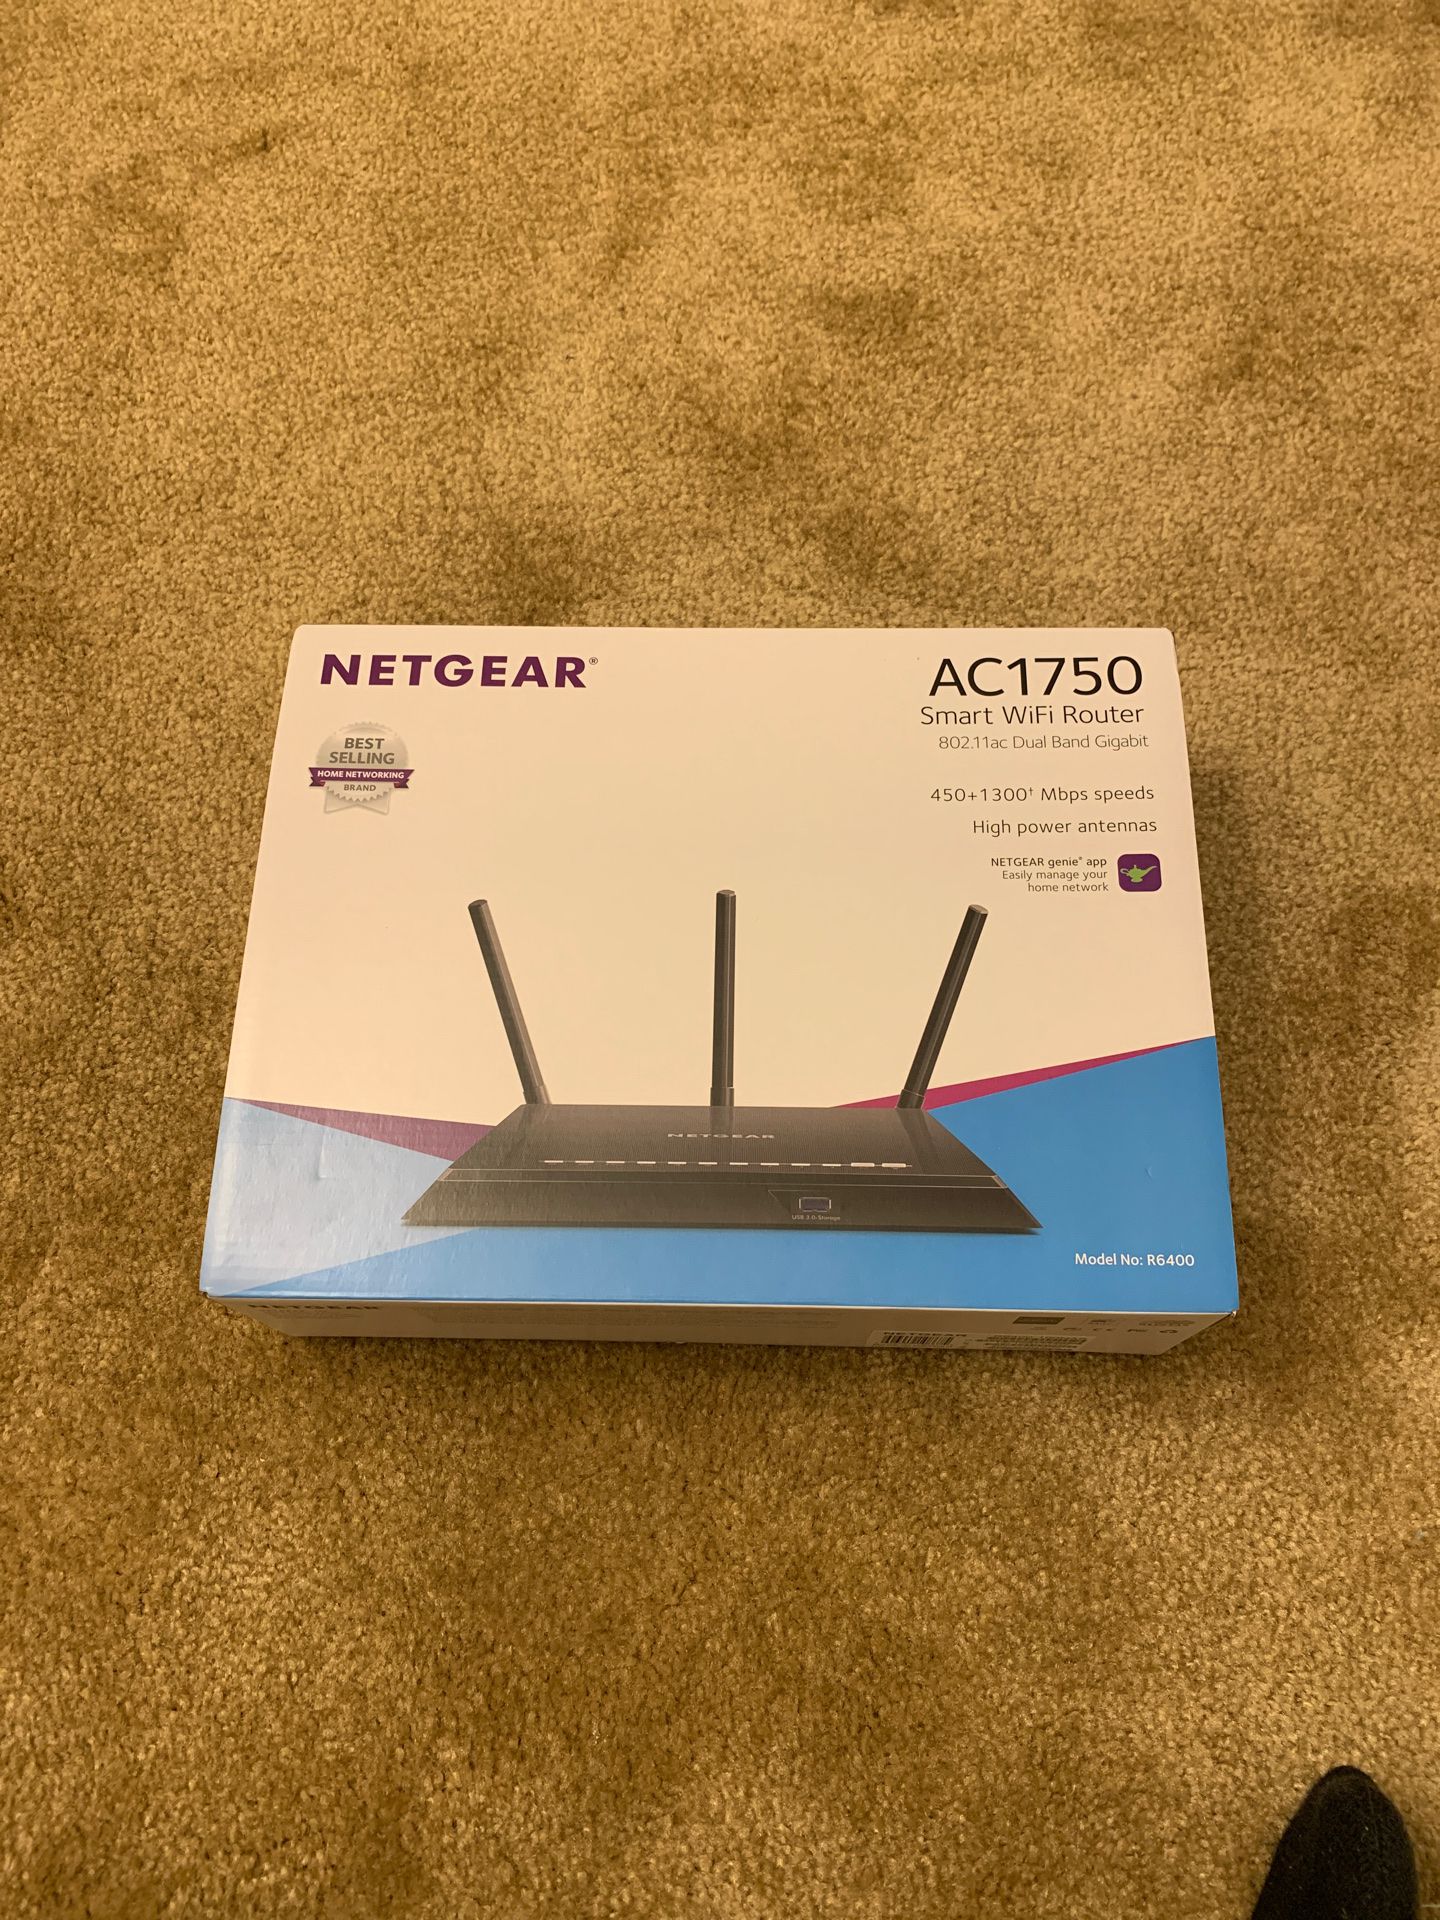 Netgear AC1750 WiFi router R6400